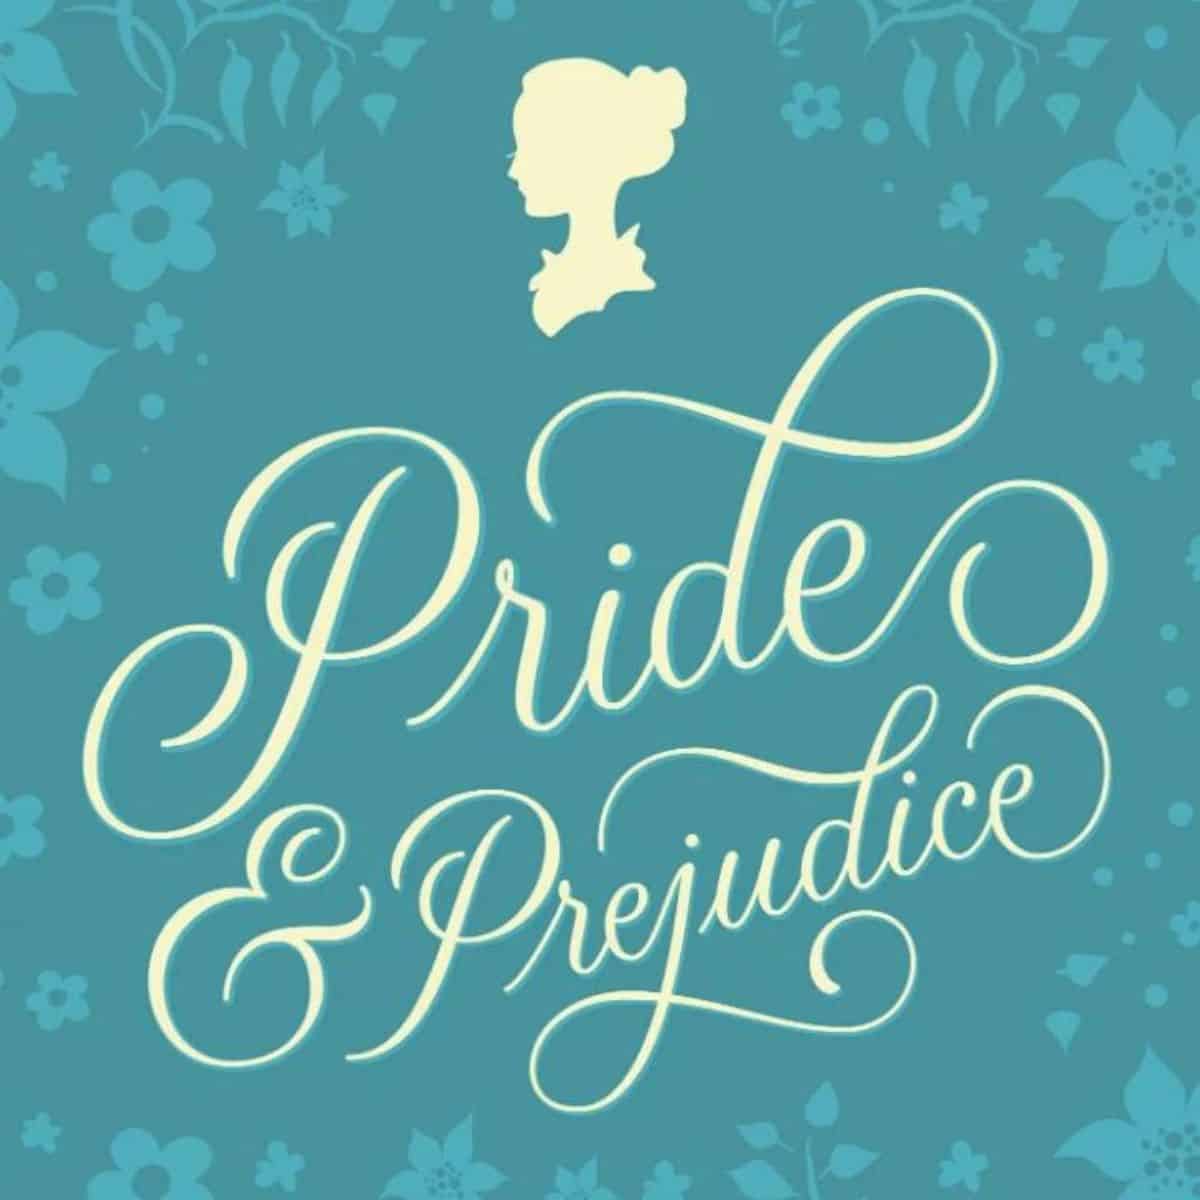 75 Famous Pride & Prejudice Book Quotes by Jane Austen